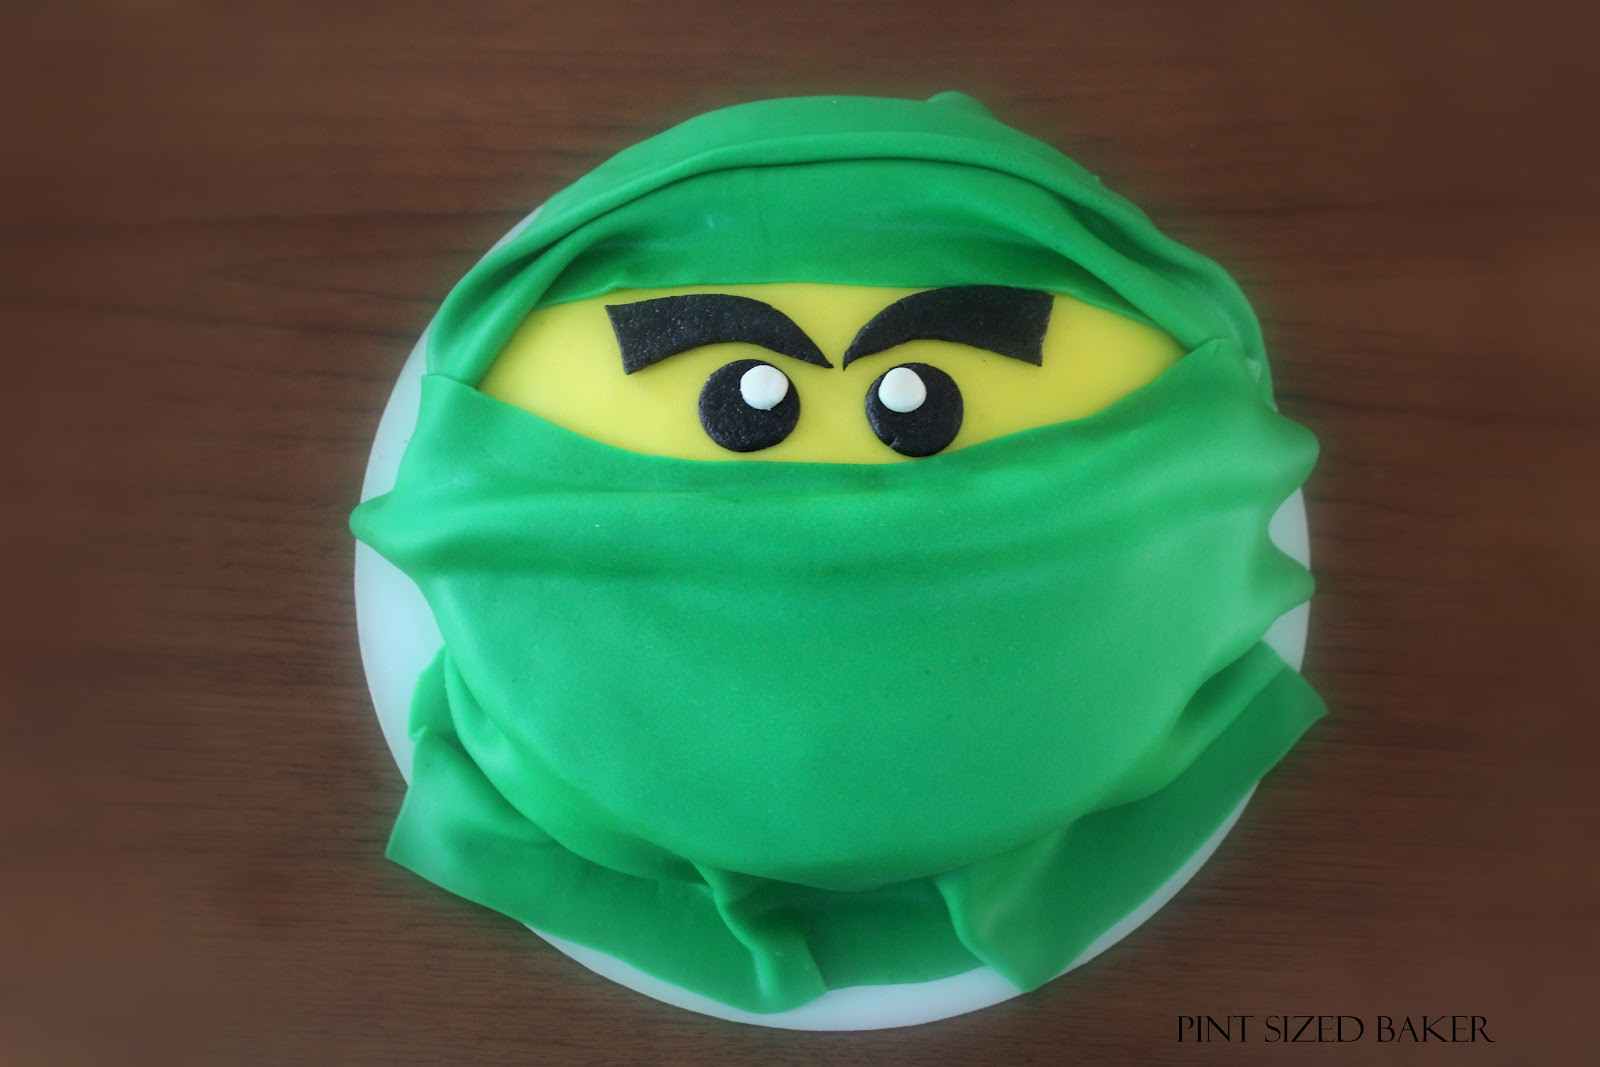 Ninjago Birthday Cake
 Basketballs and Ninjago Pint Sized Baker